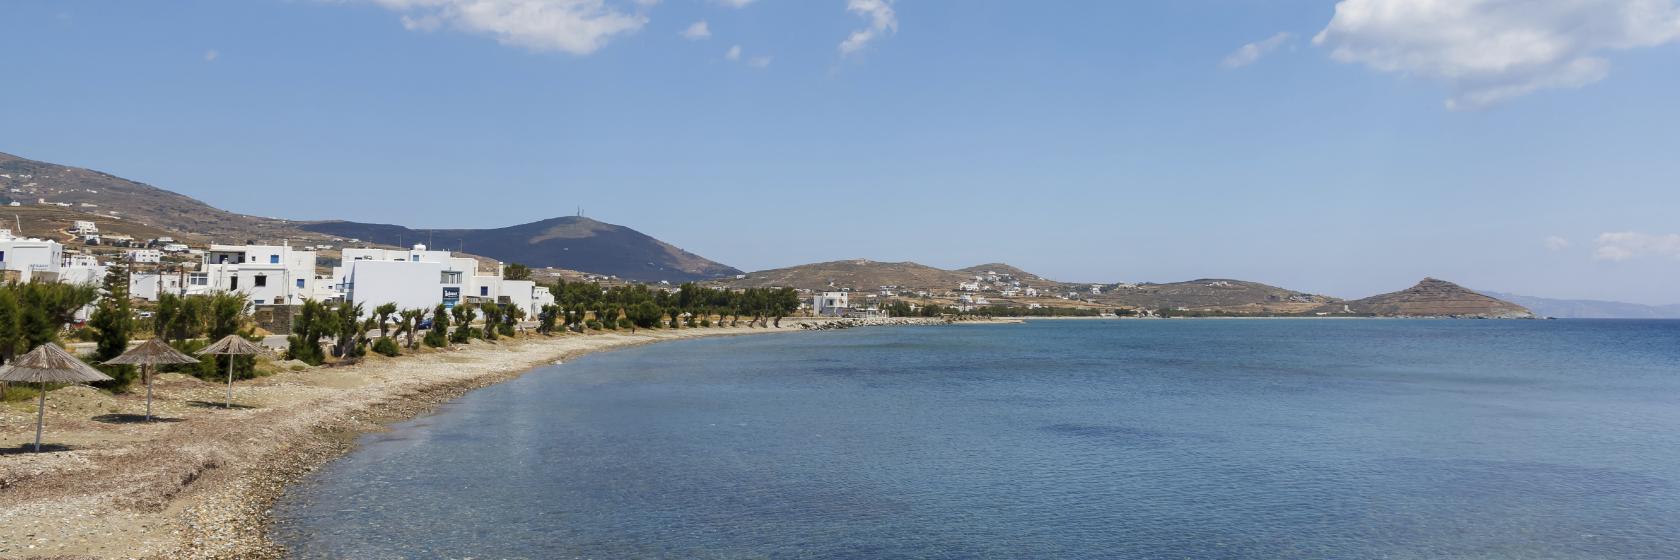 Agios Sostis, Tinos Hotels